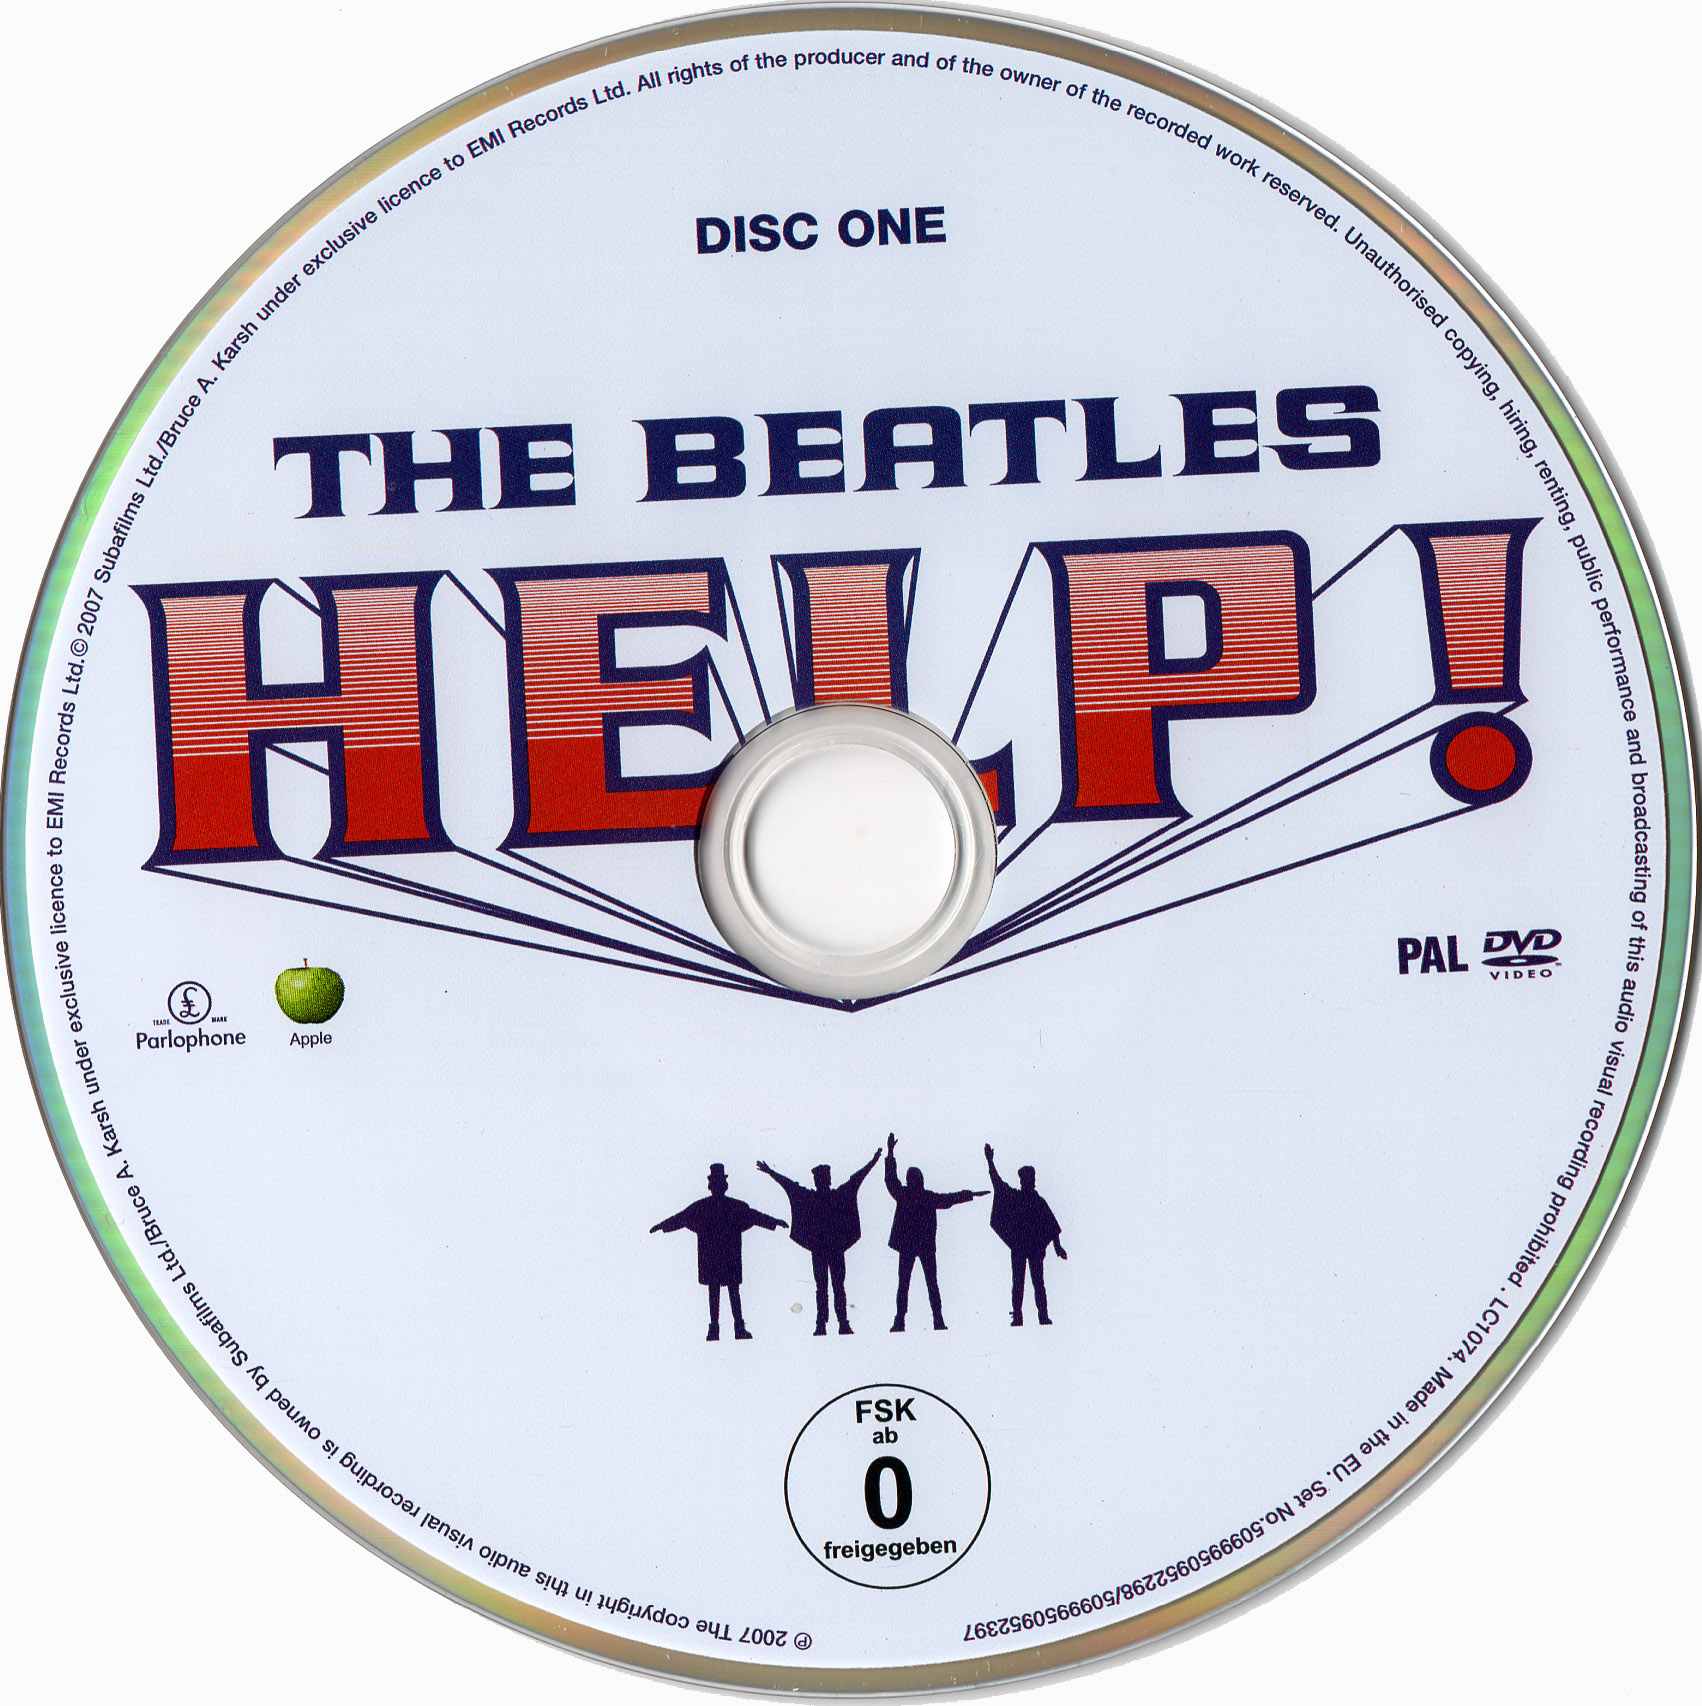 The Beatles Help DISC 1